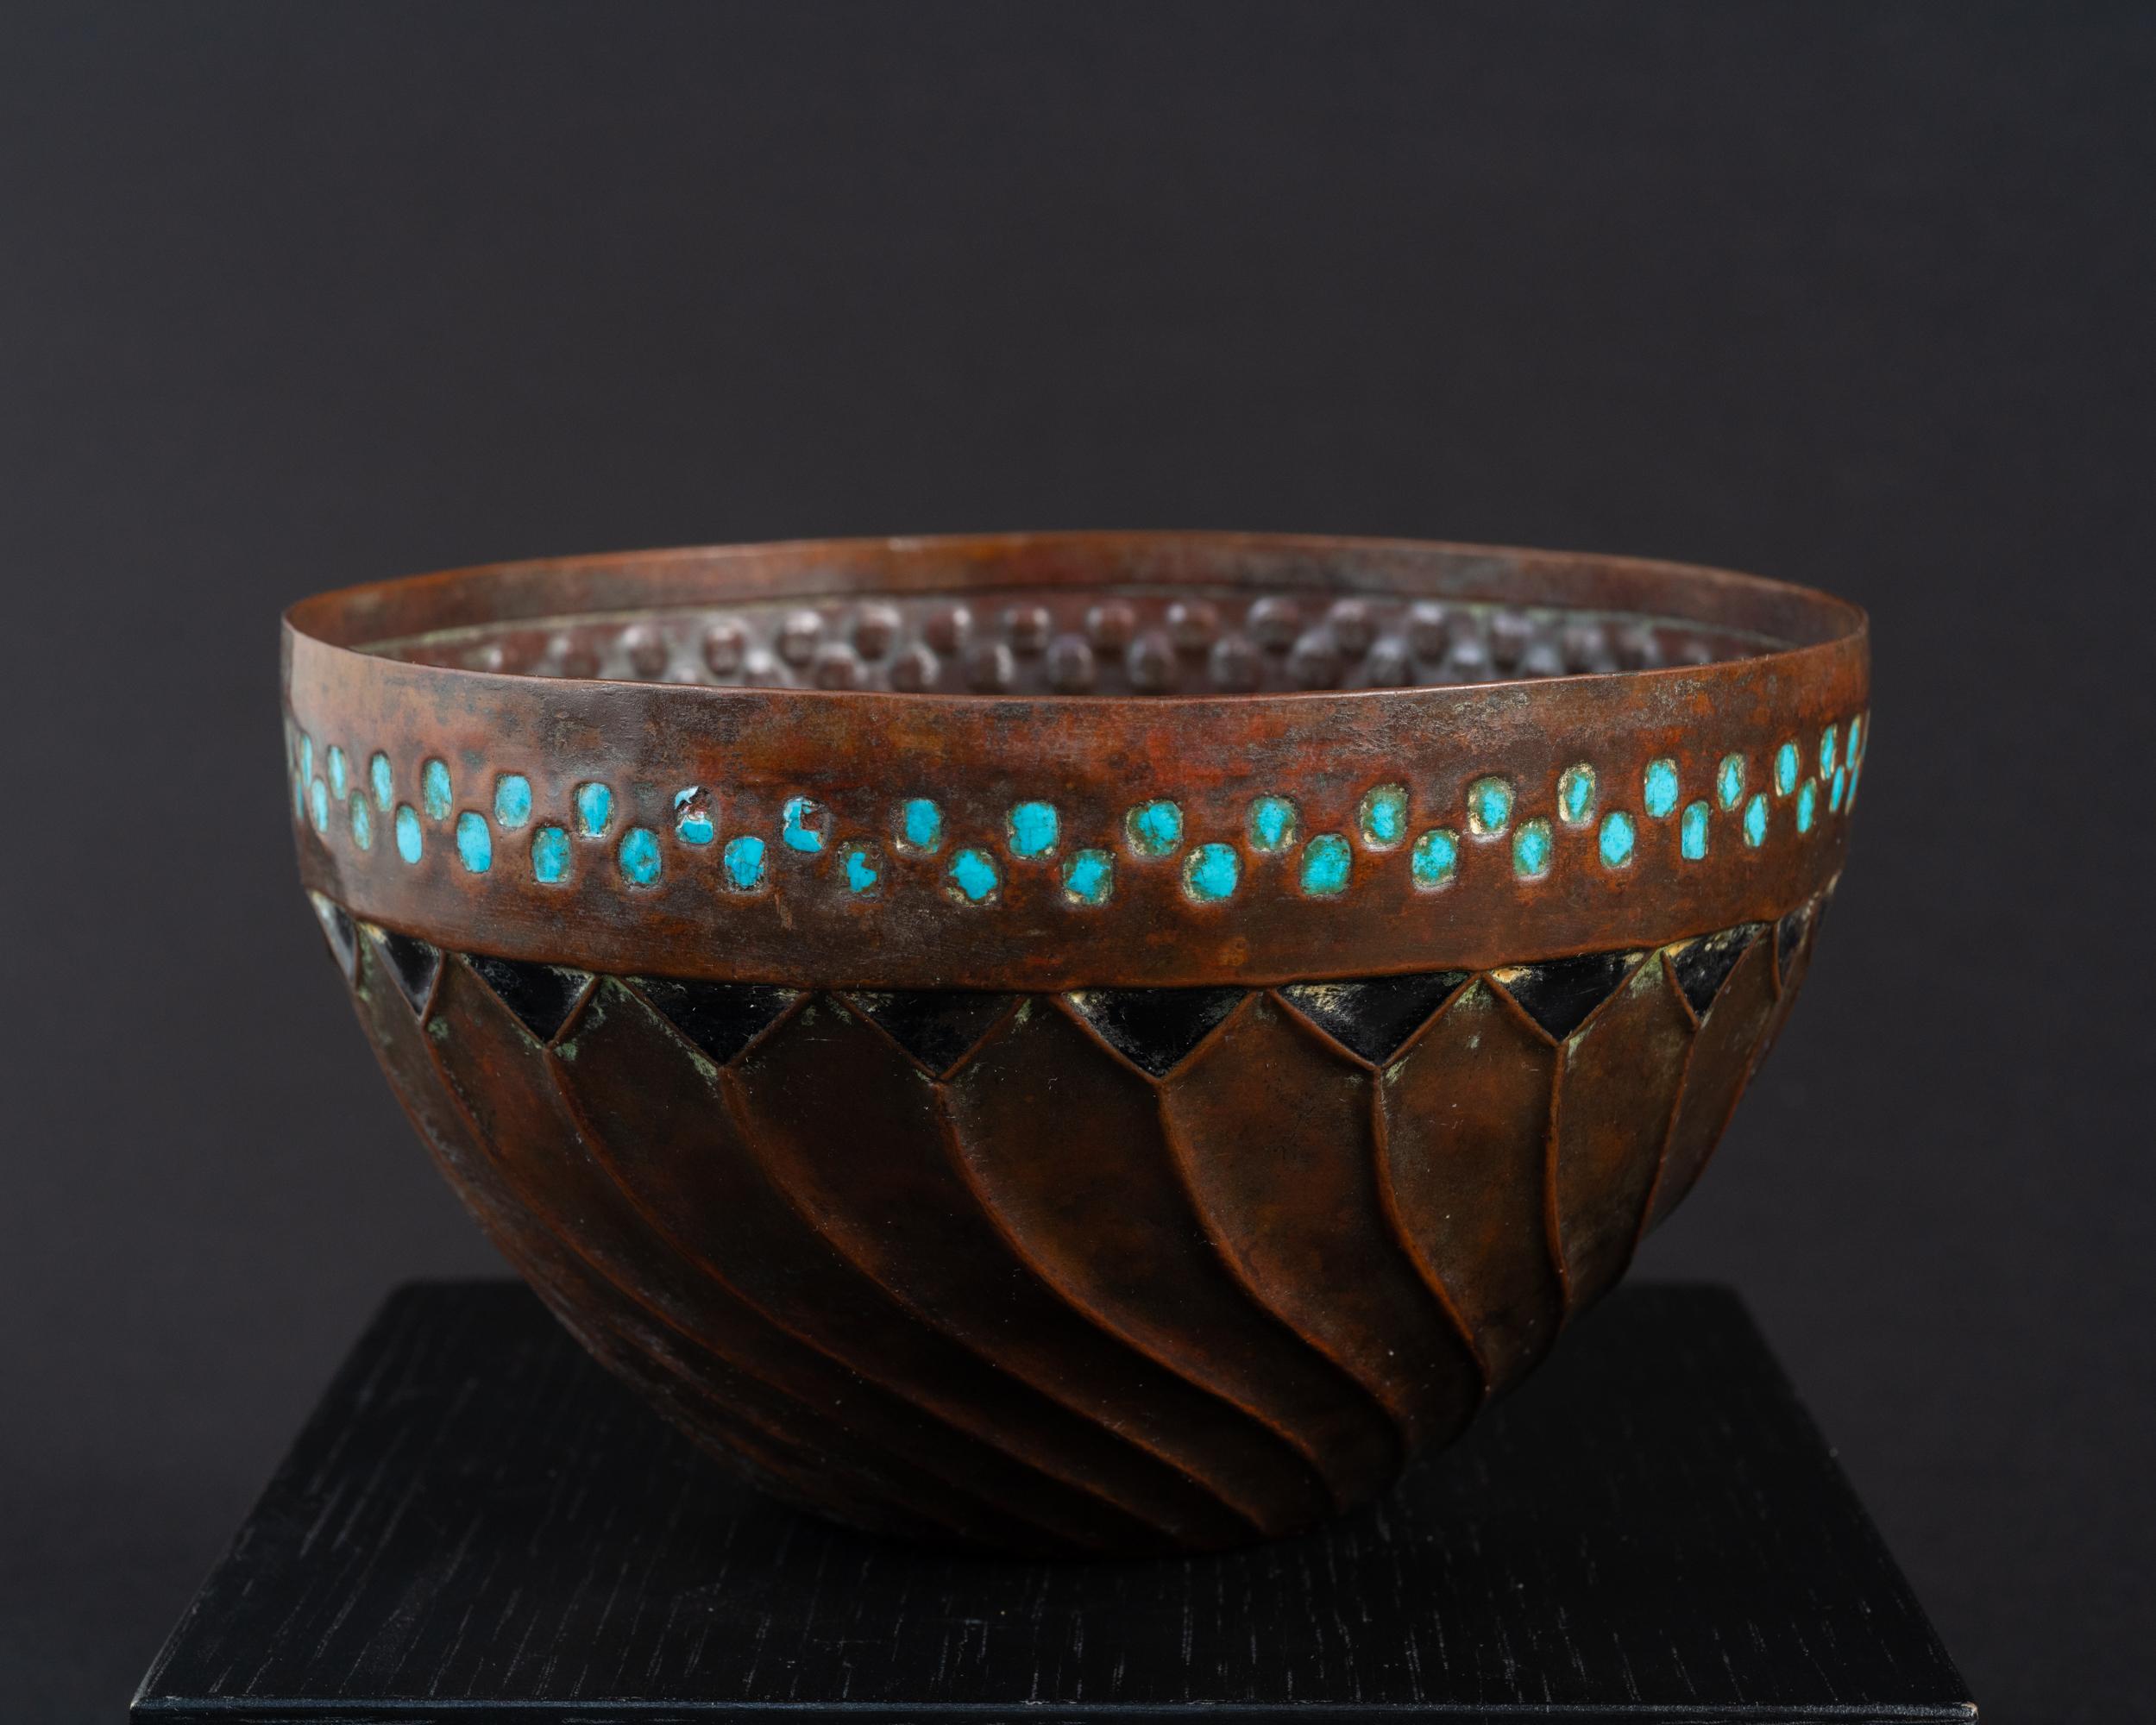 German Enameled Copper Art Nouveau Spiral Bowl by Ludwig Karl Maria Vierthaler